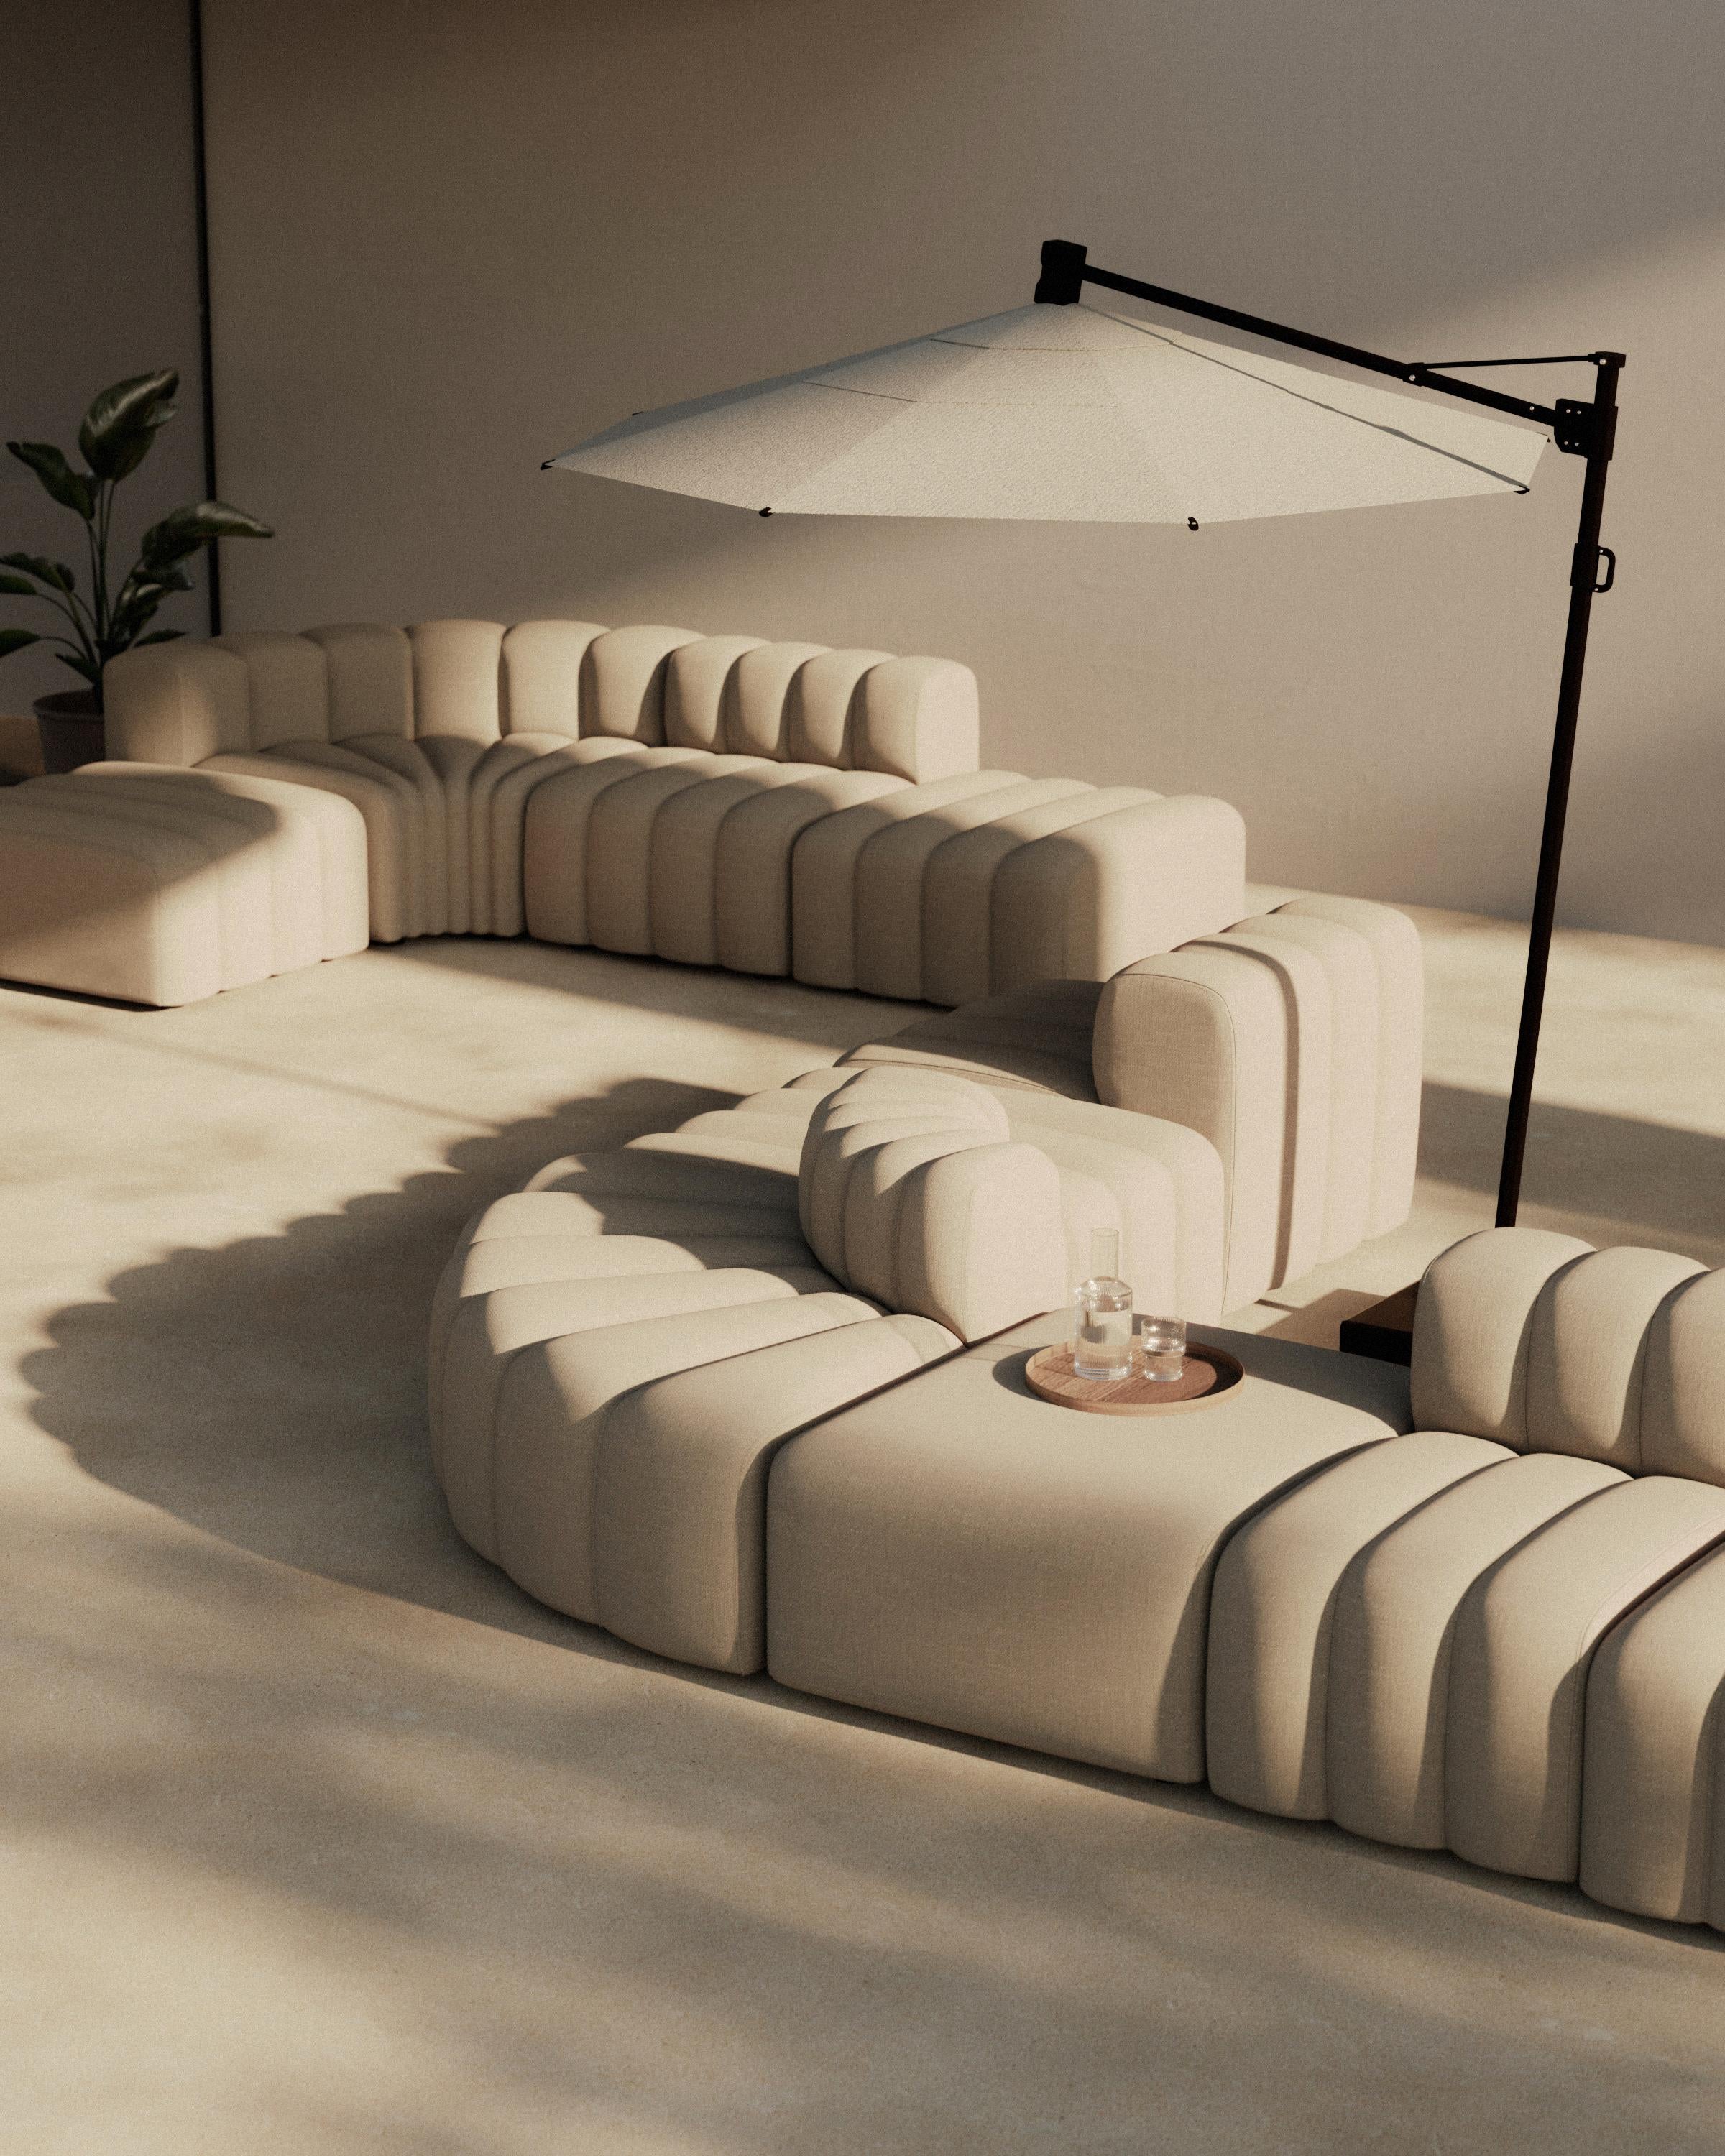 STUDIO sofa by Kristian Sofus Hansen & Tommy Hyldahl for Nor11
Outdoor

Measures: Setup 1 (2x medium, 1x ottoman, 1x armrest):
L. 240 cm / P. 96 cm / H. 70 cm / Seating H. 42cm

Modular sofa: assemble different modules to create your